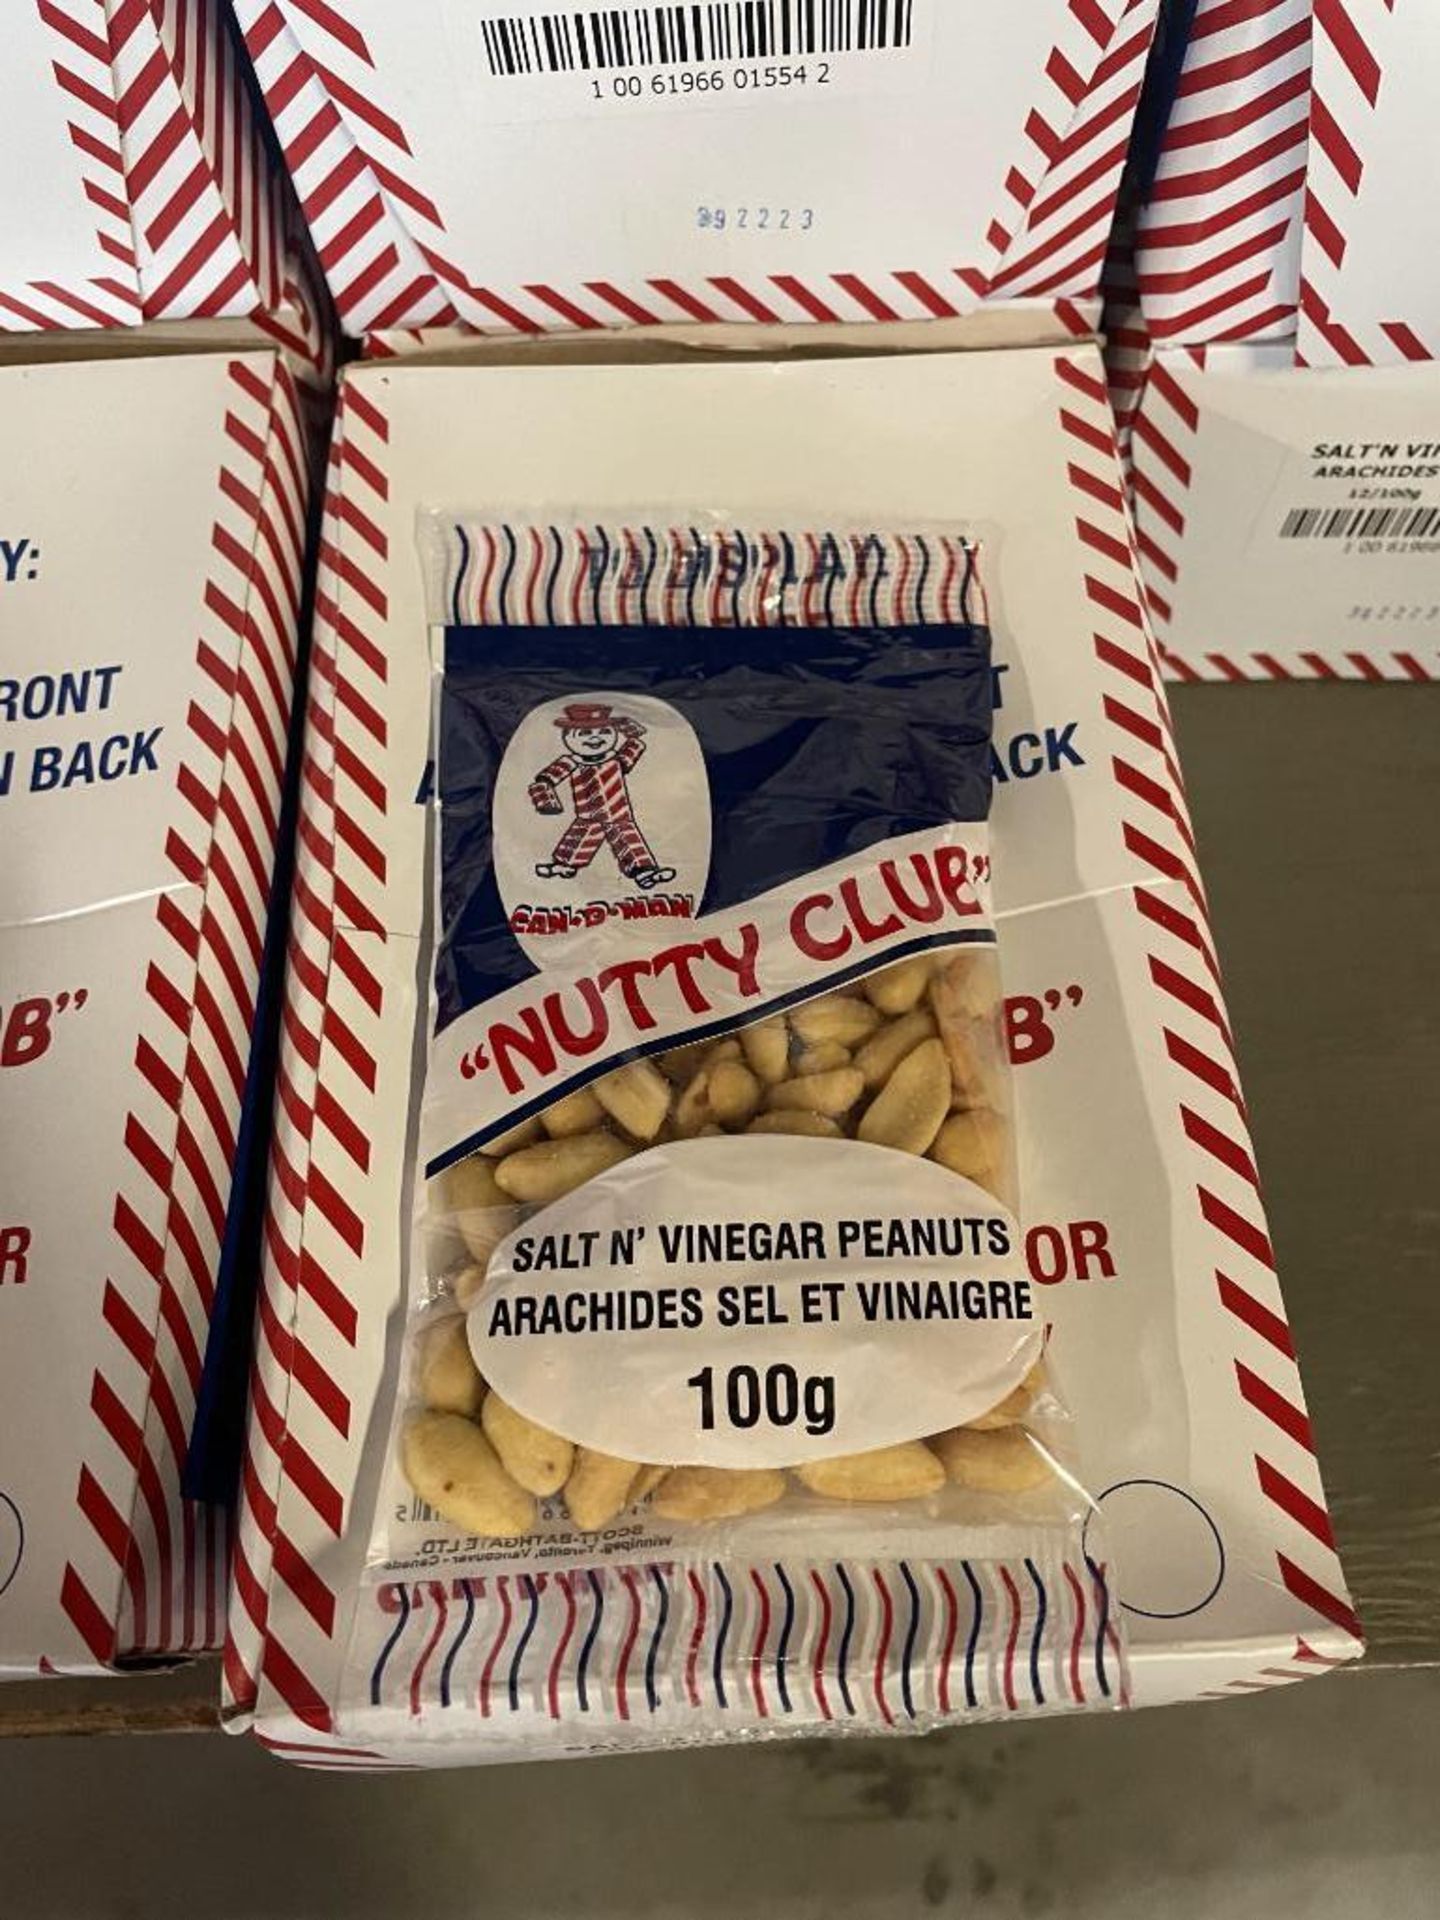 APPROX. (11) BOXES OF NUTTY CLUB SALT'N VINEGAR PEANUTS, 12/100G PER BOX - Image 2 of 2